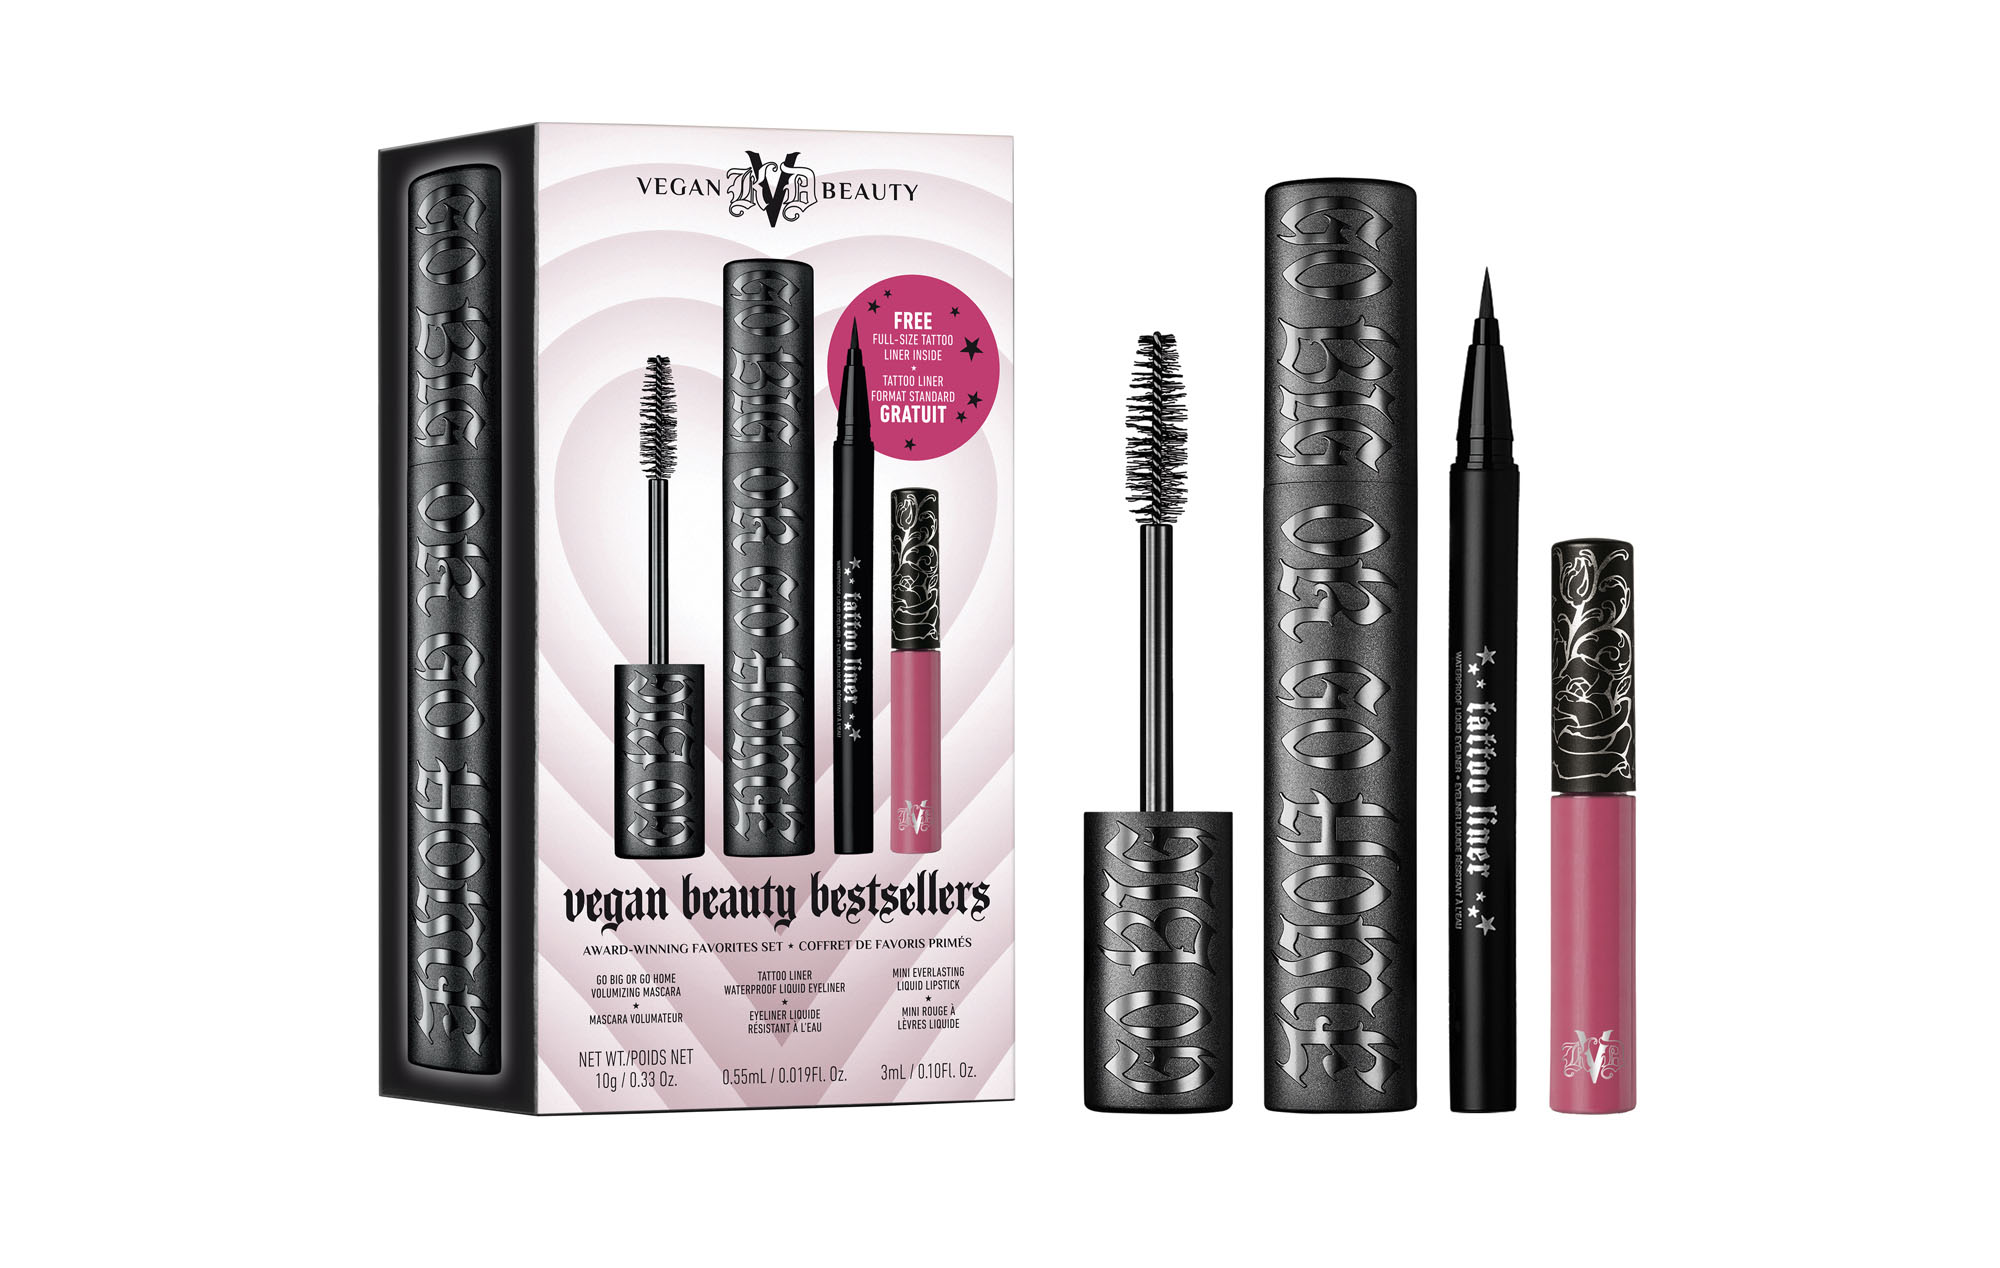 KVD Vegan Beauty Vegan Bestsellers Kit, Available online and in store at Ulta Beauty, Aug 30.